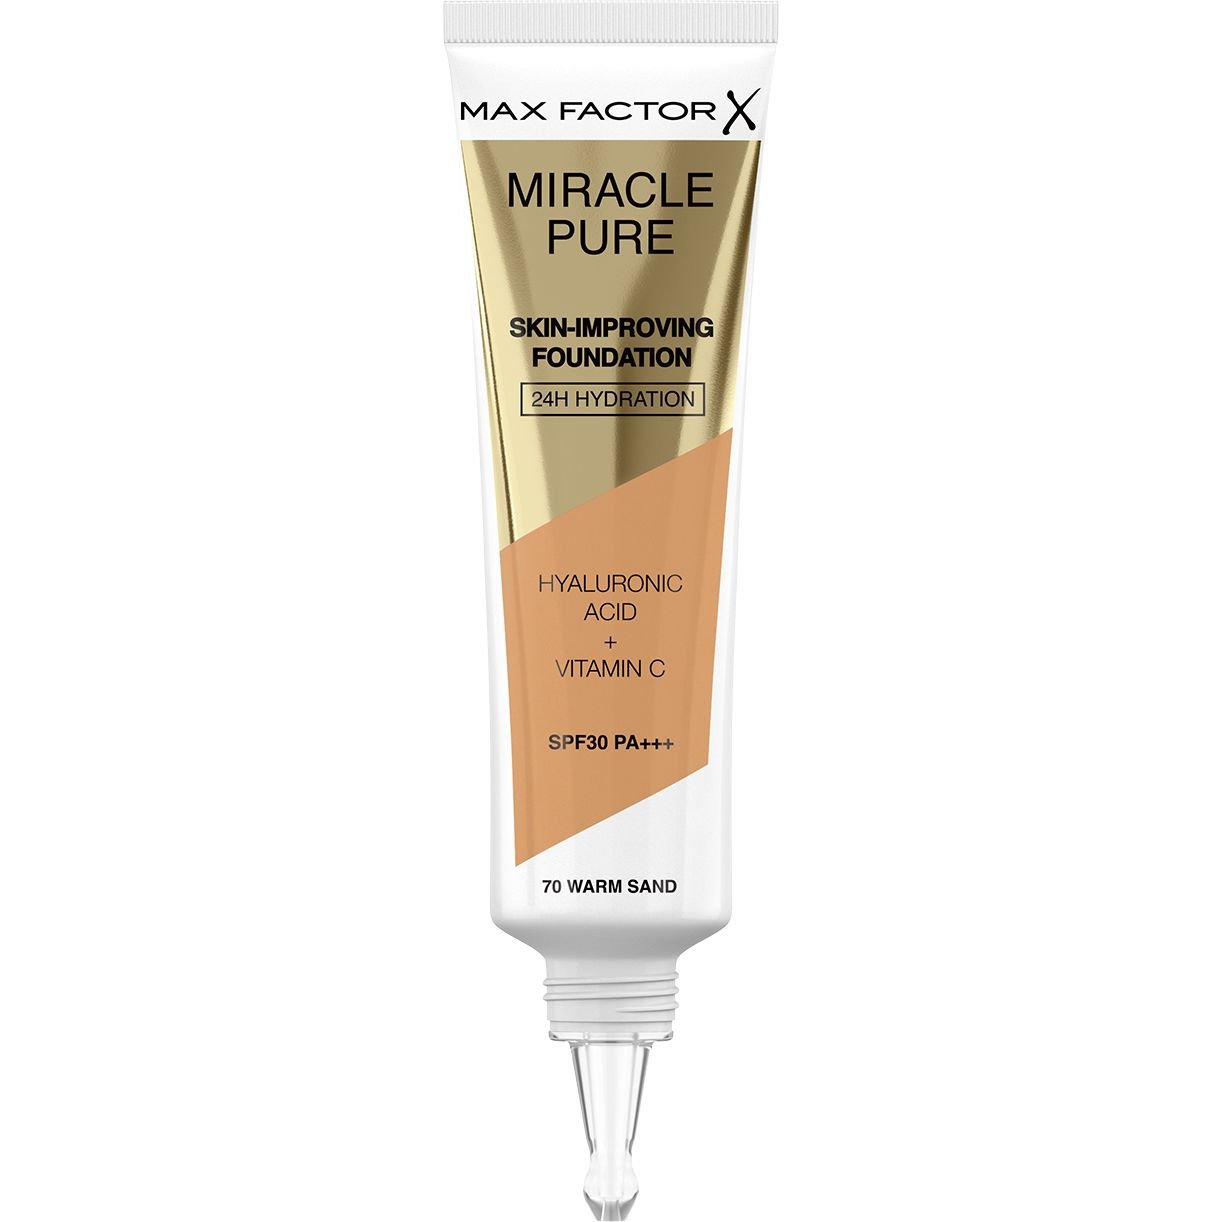 Тональная основа Max Factor Miracle Pure Skin-Improving Foundation SPF30 тон 070 (Warm sand) 30 мл - фото 2